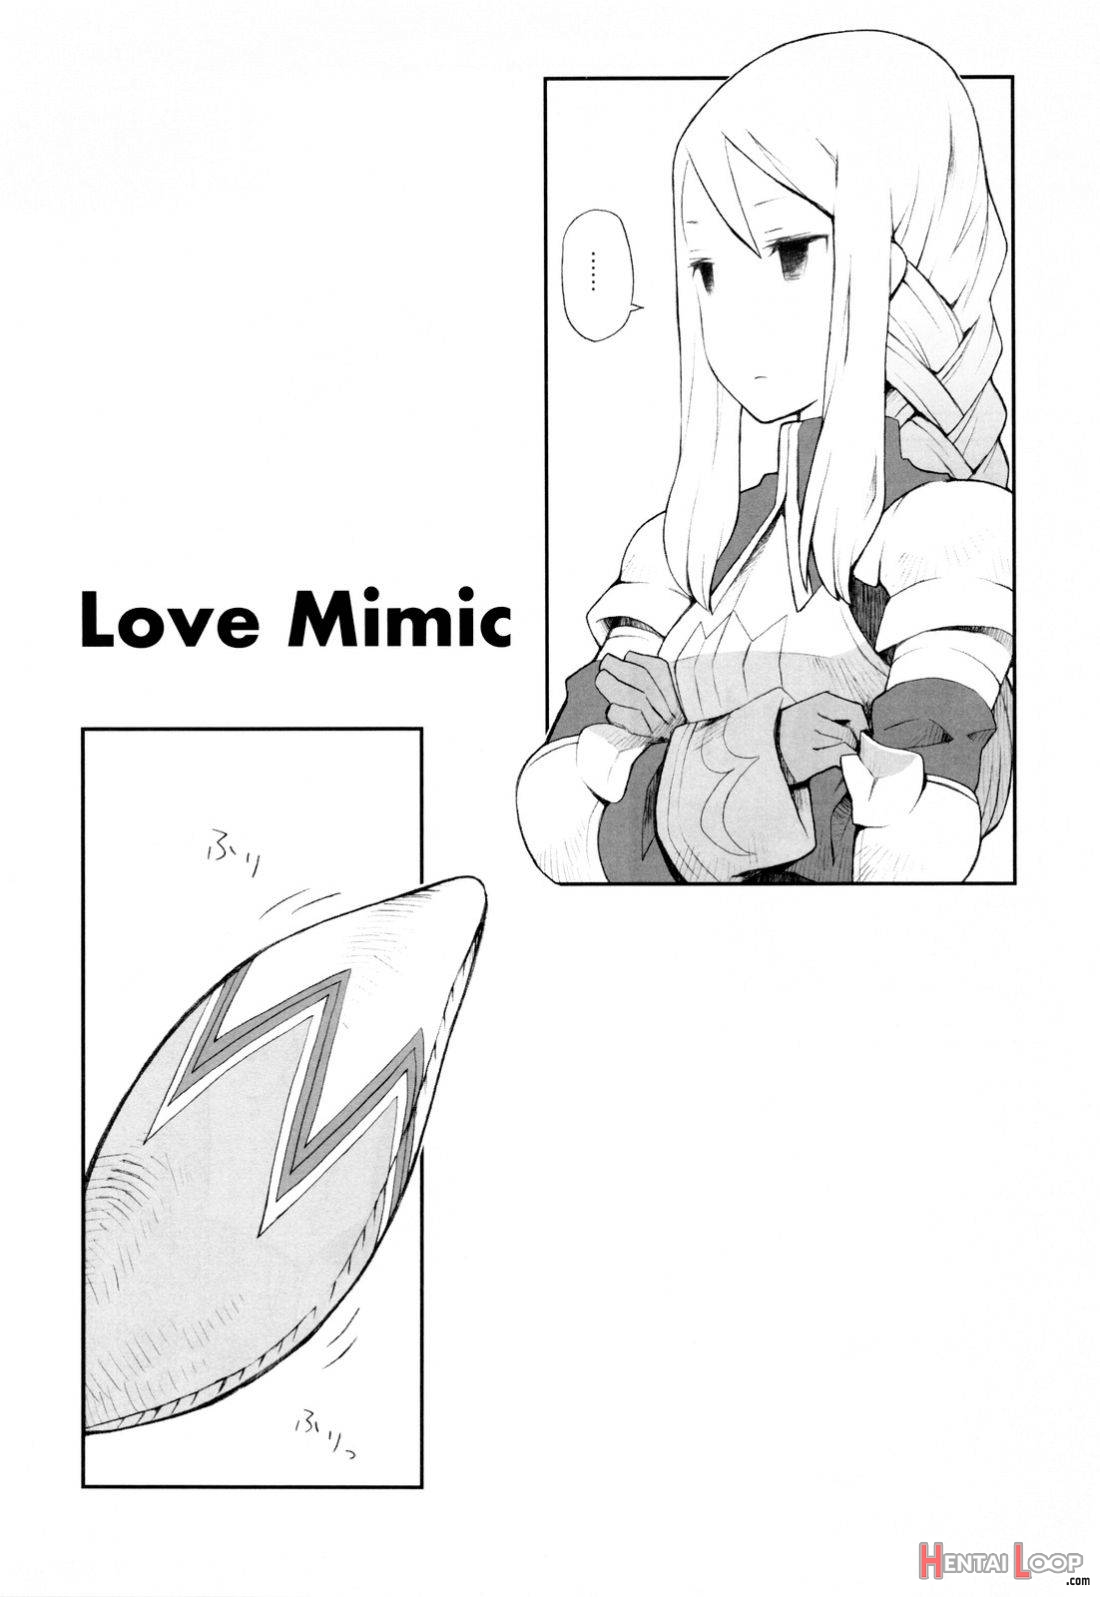 Love Mimic page 2